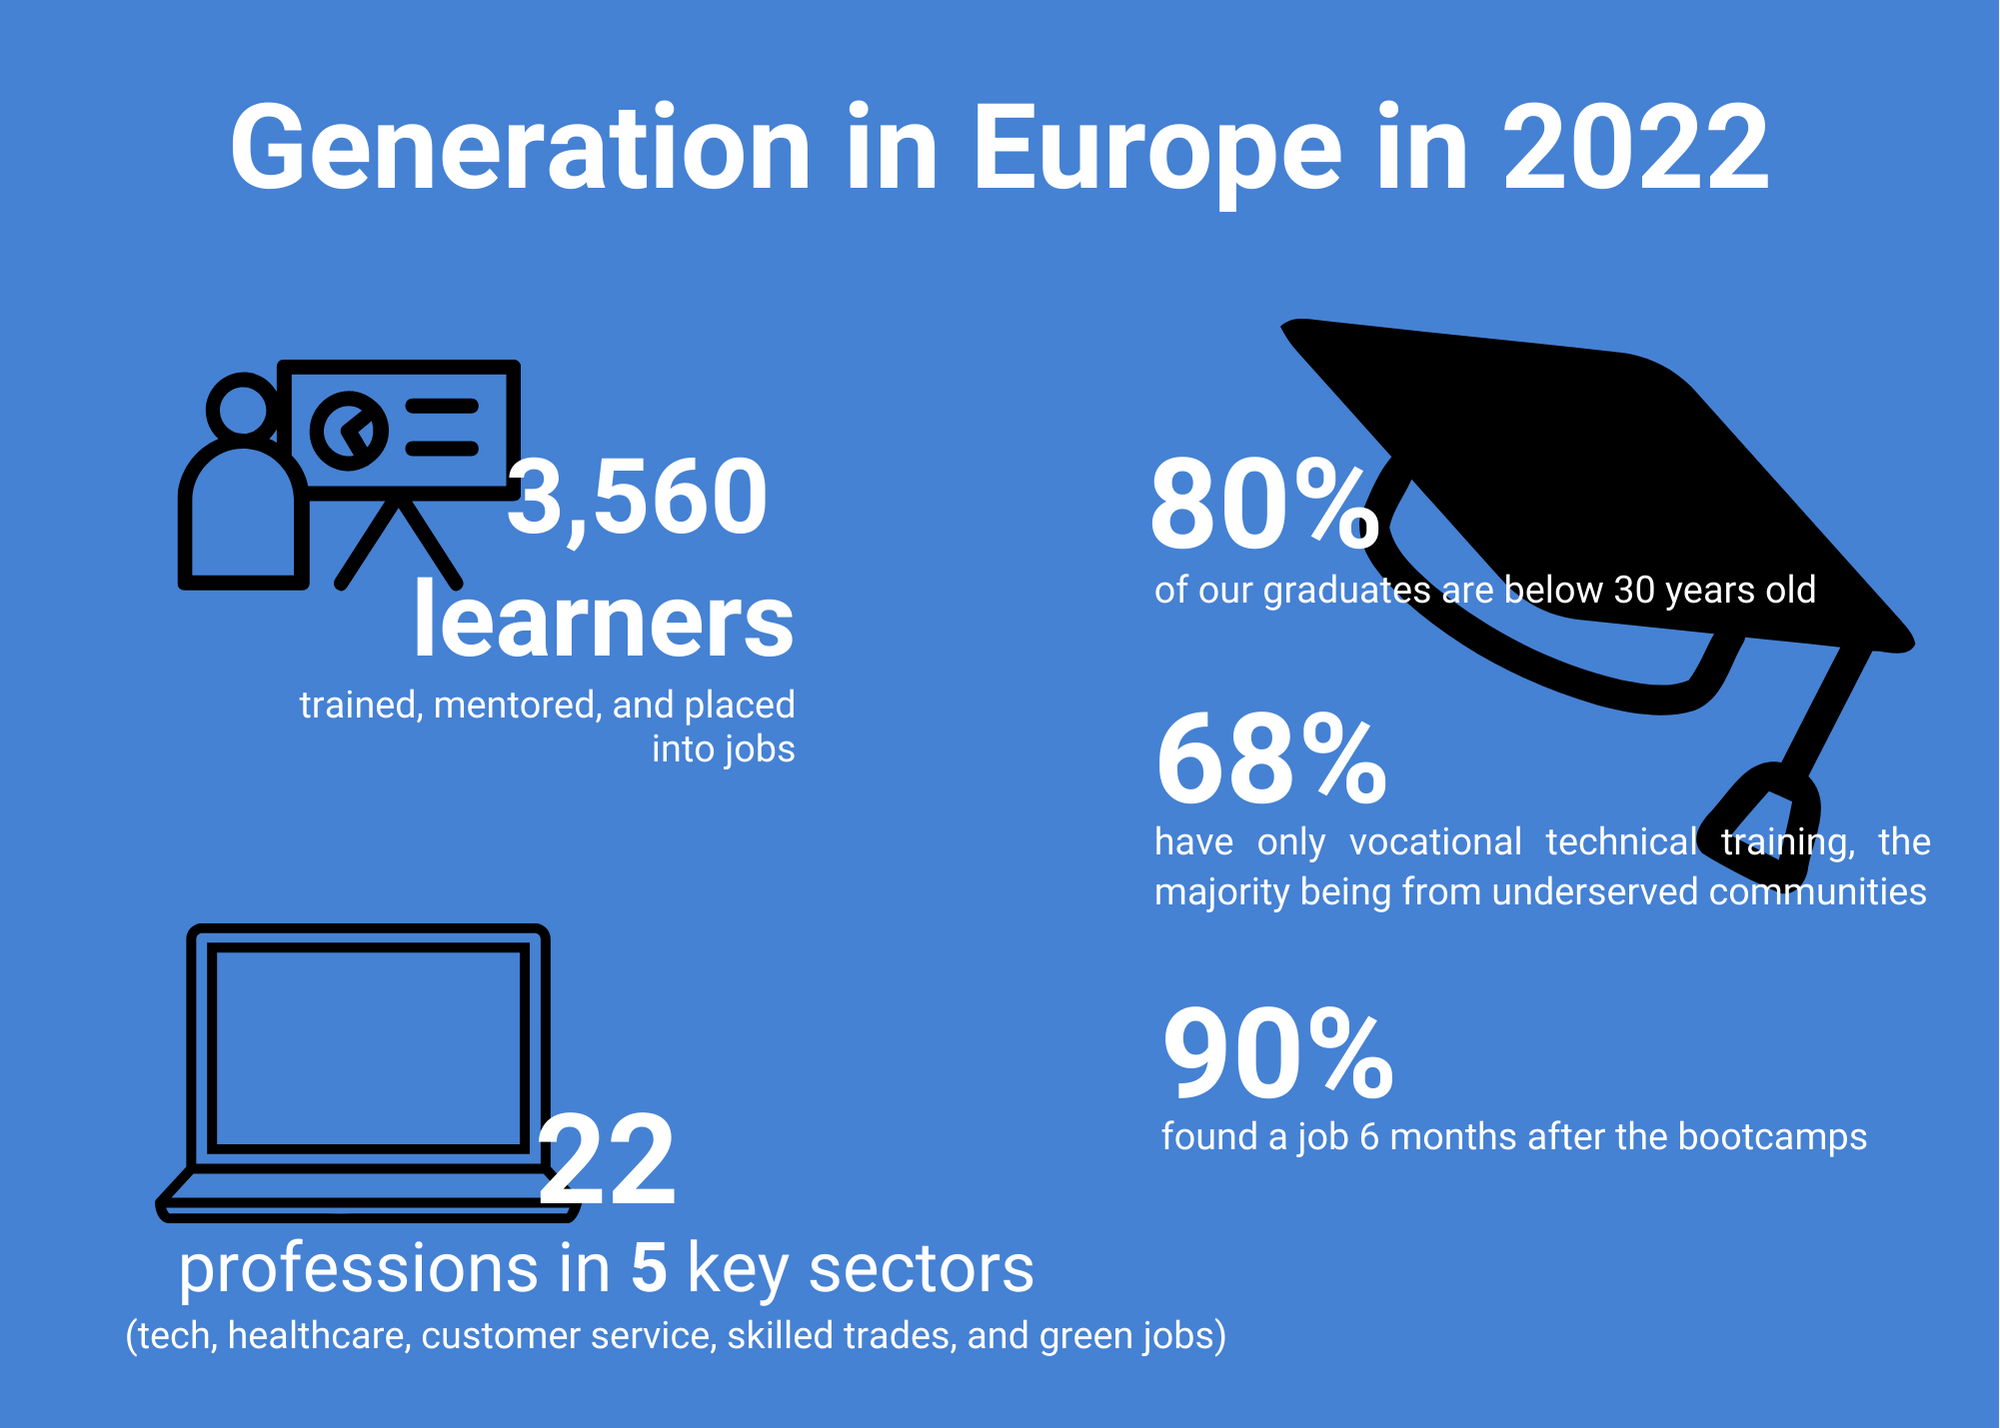 Generation in Europe in 2022